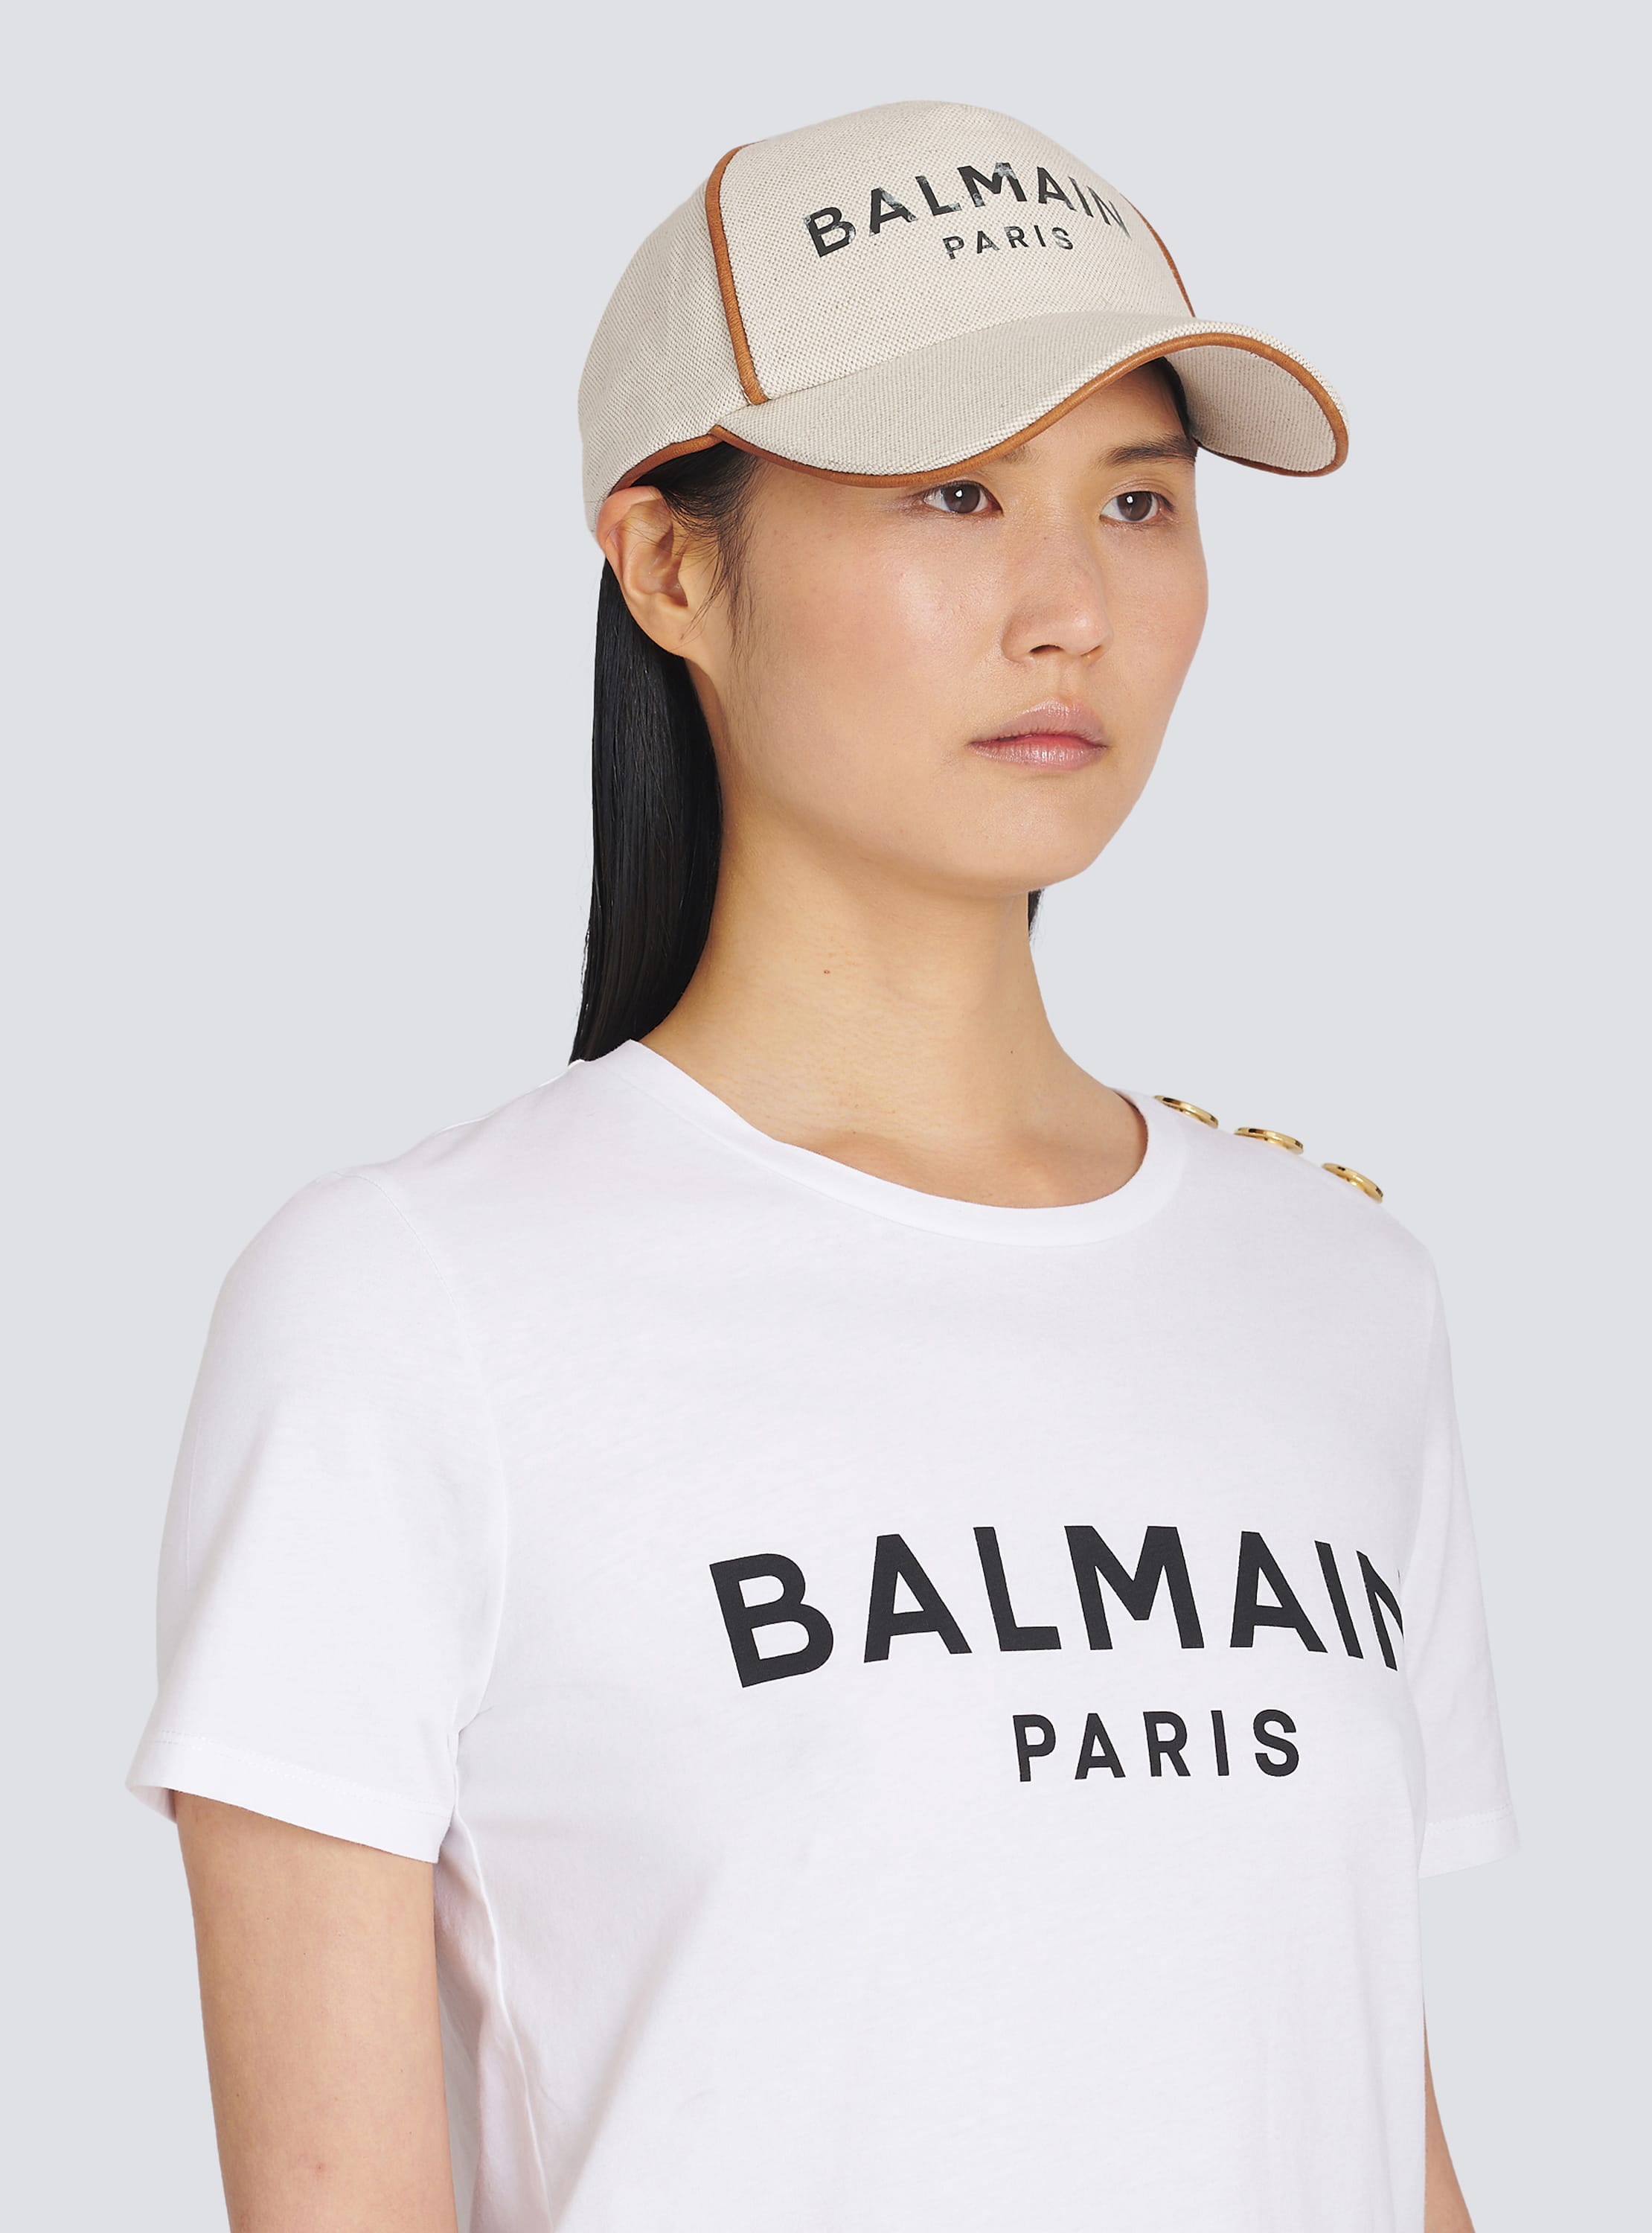 Cappellino B-Army in cotone con logo Balmain marrone